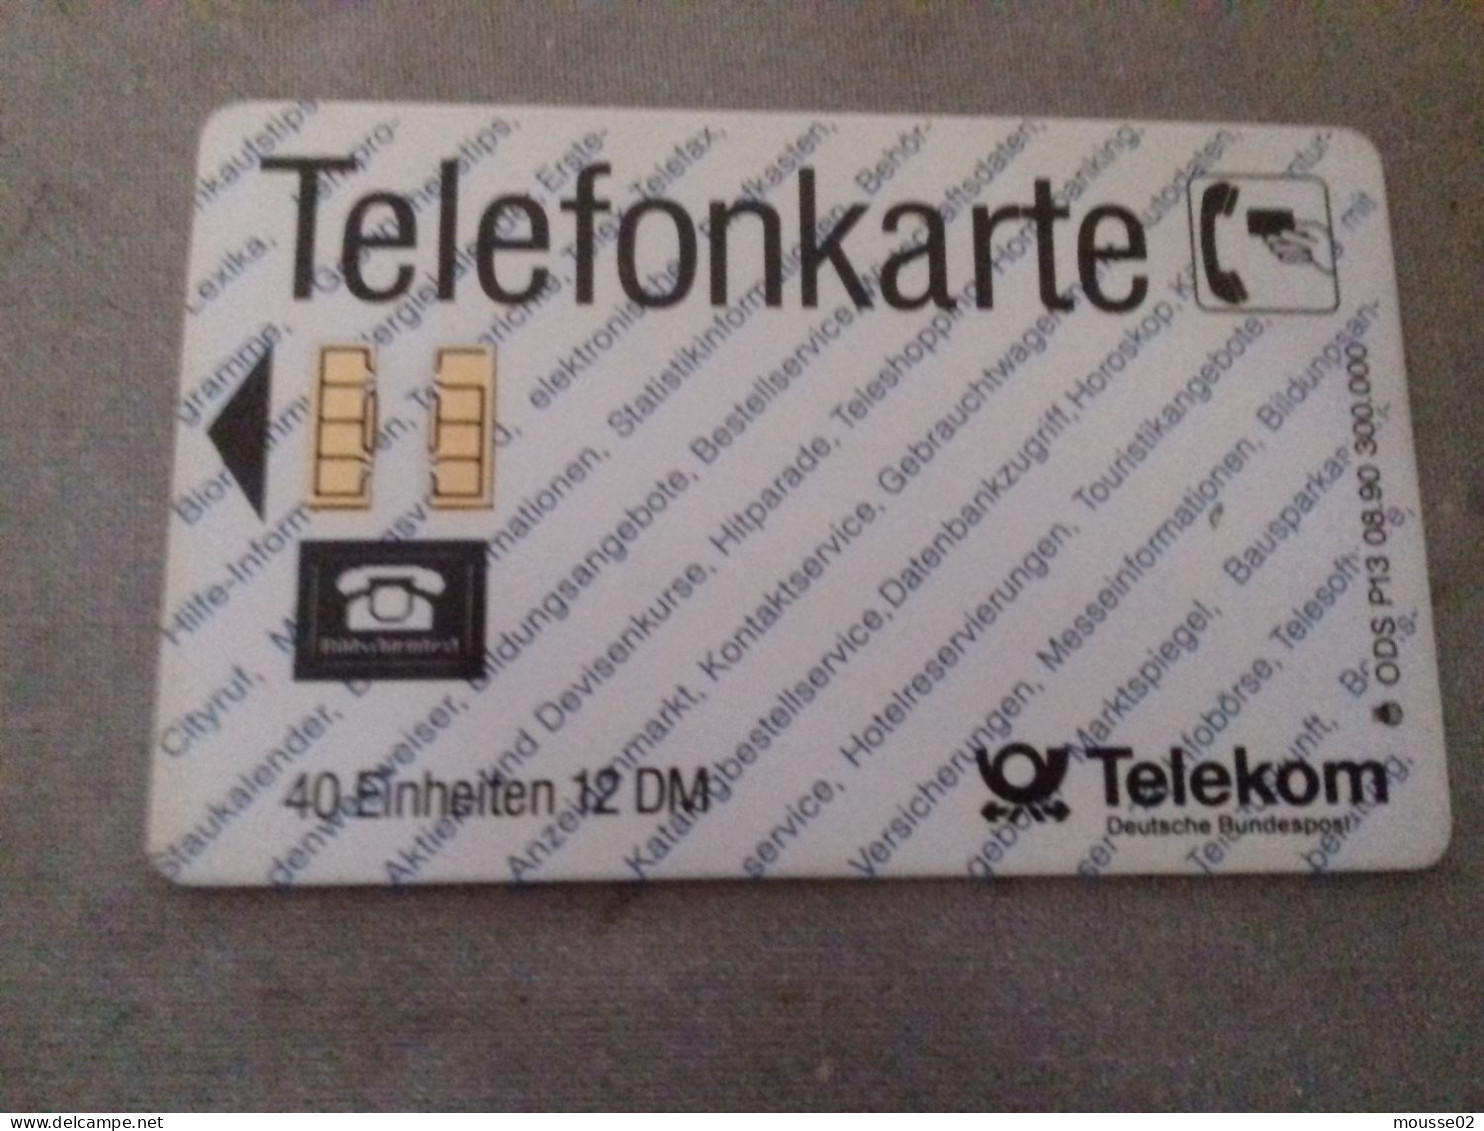 TELECARTE ALLEMANDE - A + AD-Series : D. Telekom AG Advertisement